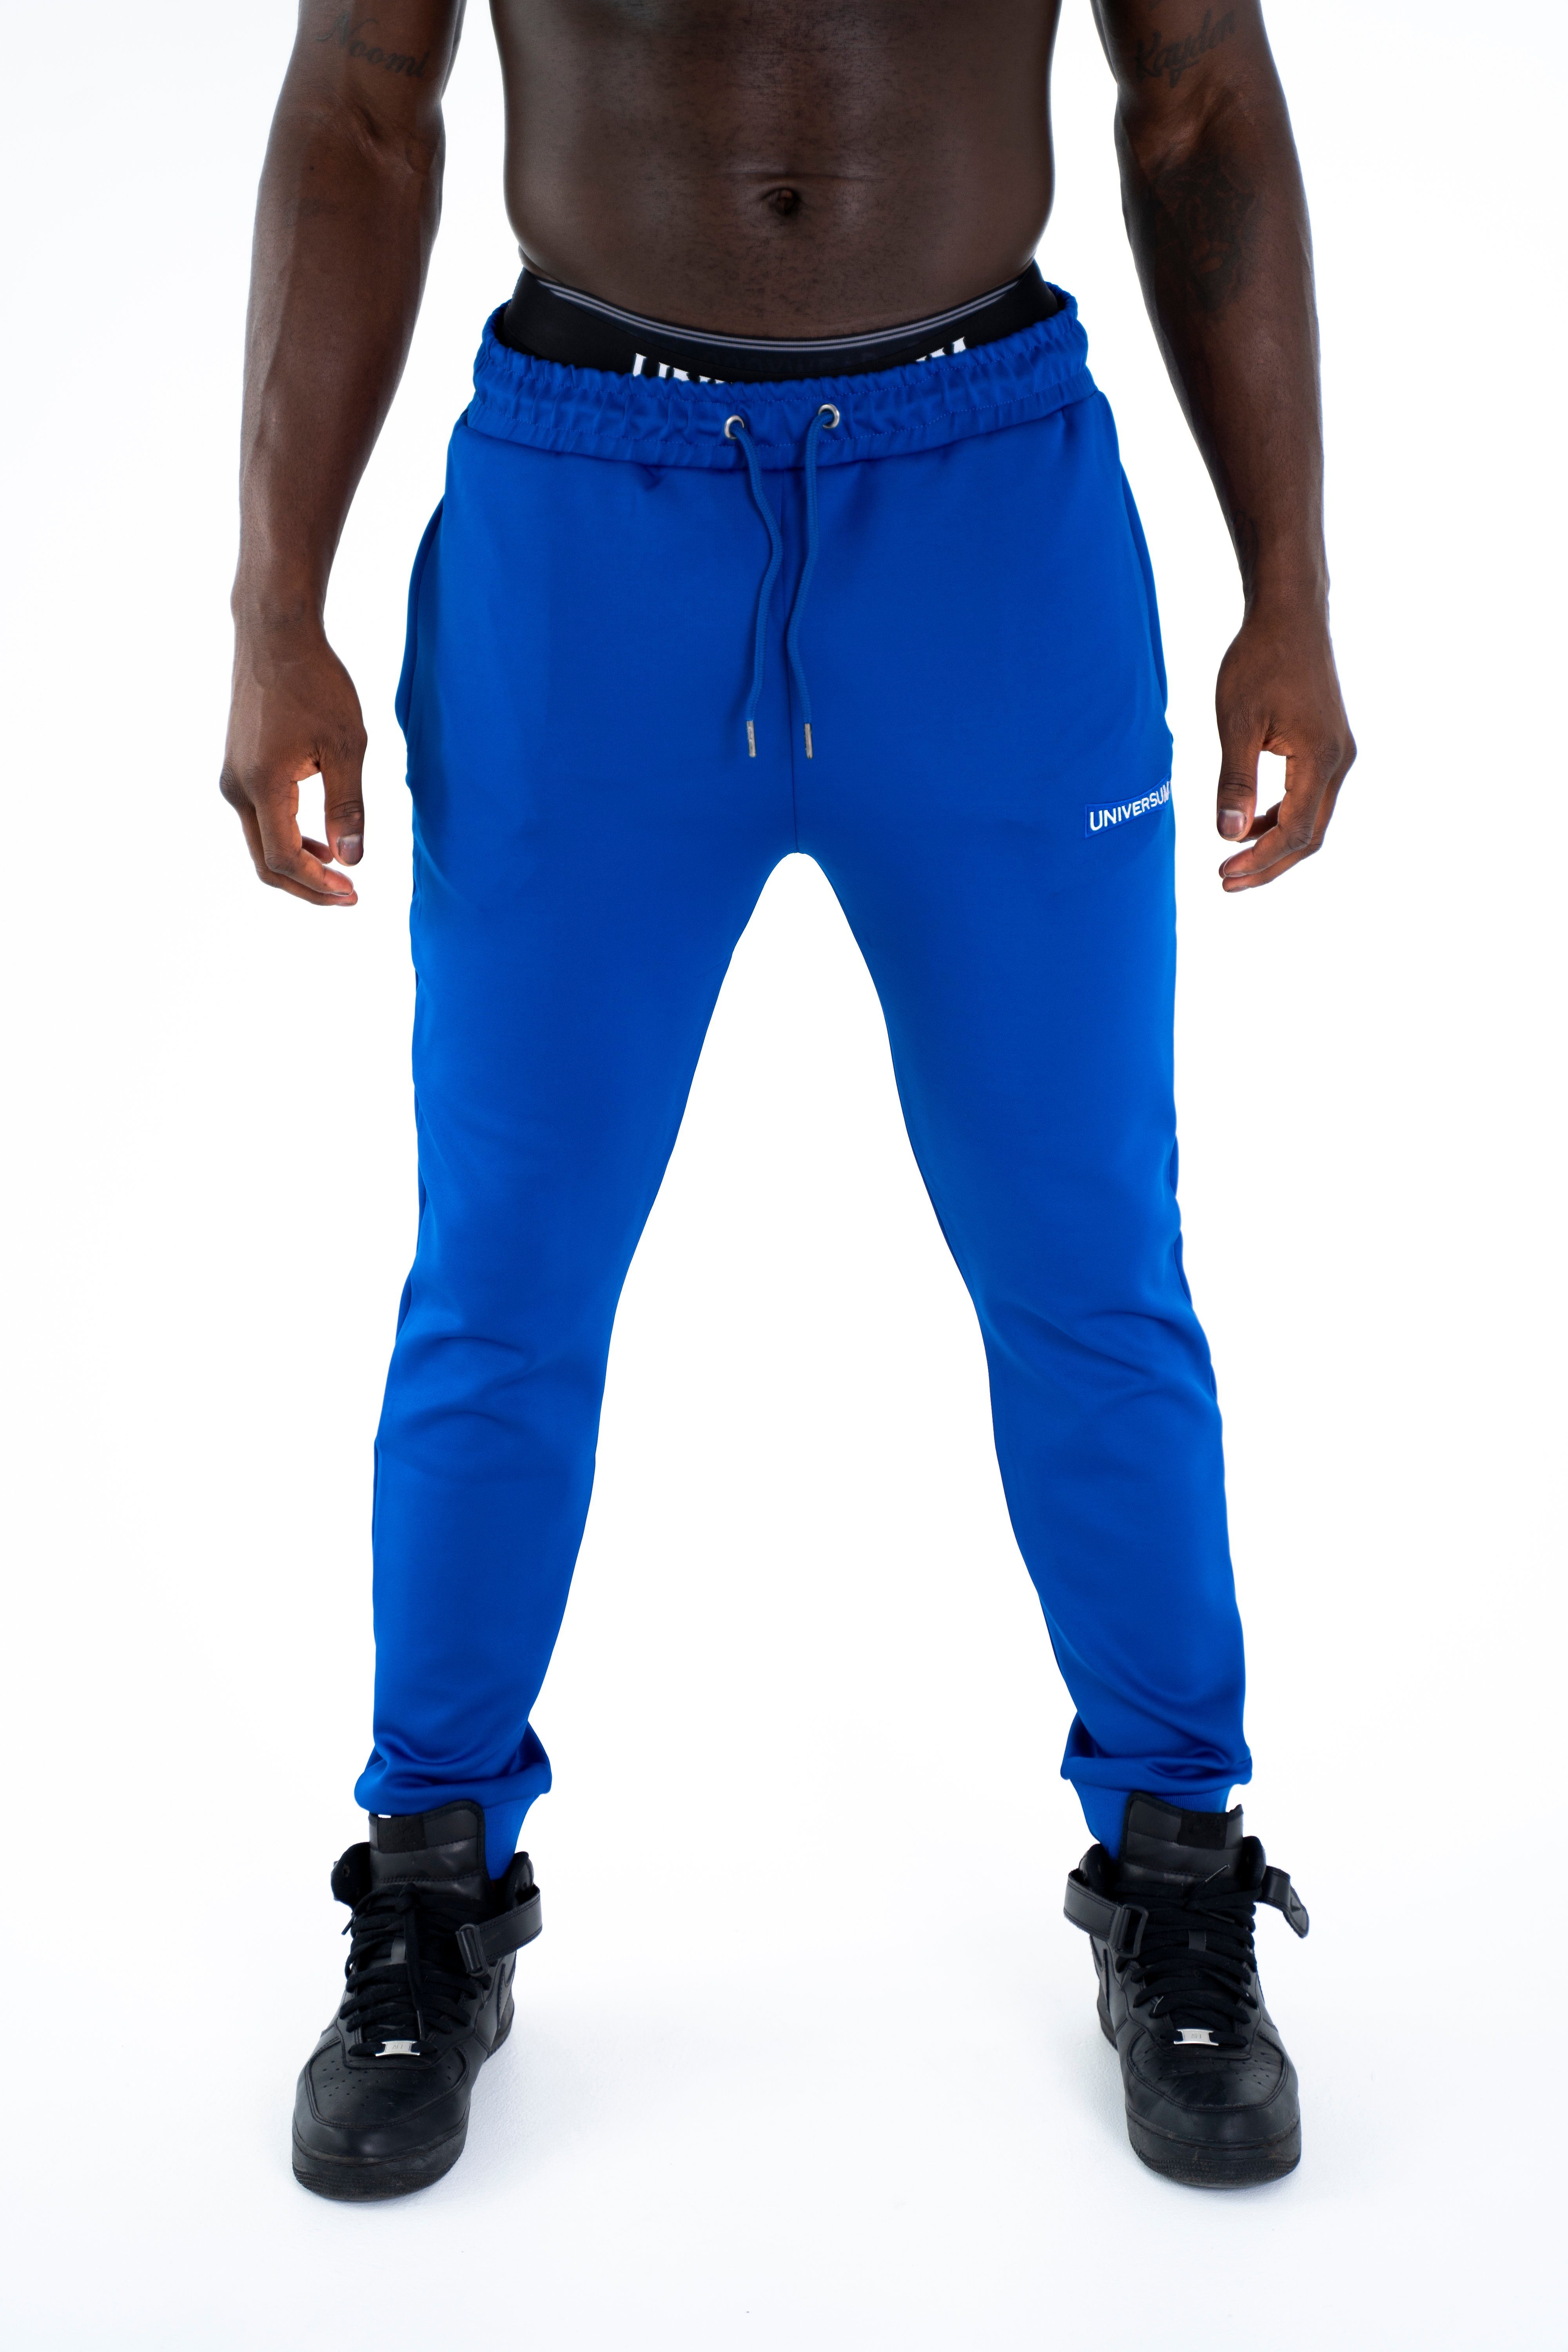 Universum Sportwear Jogginghose Modern Fit Pants Jogginghose für Sport, Fitness und Freizeit blau